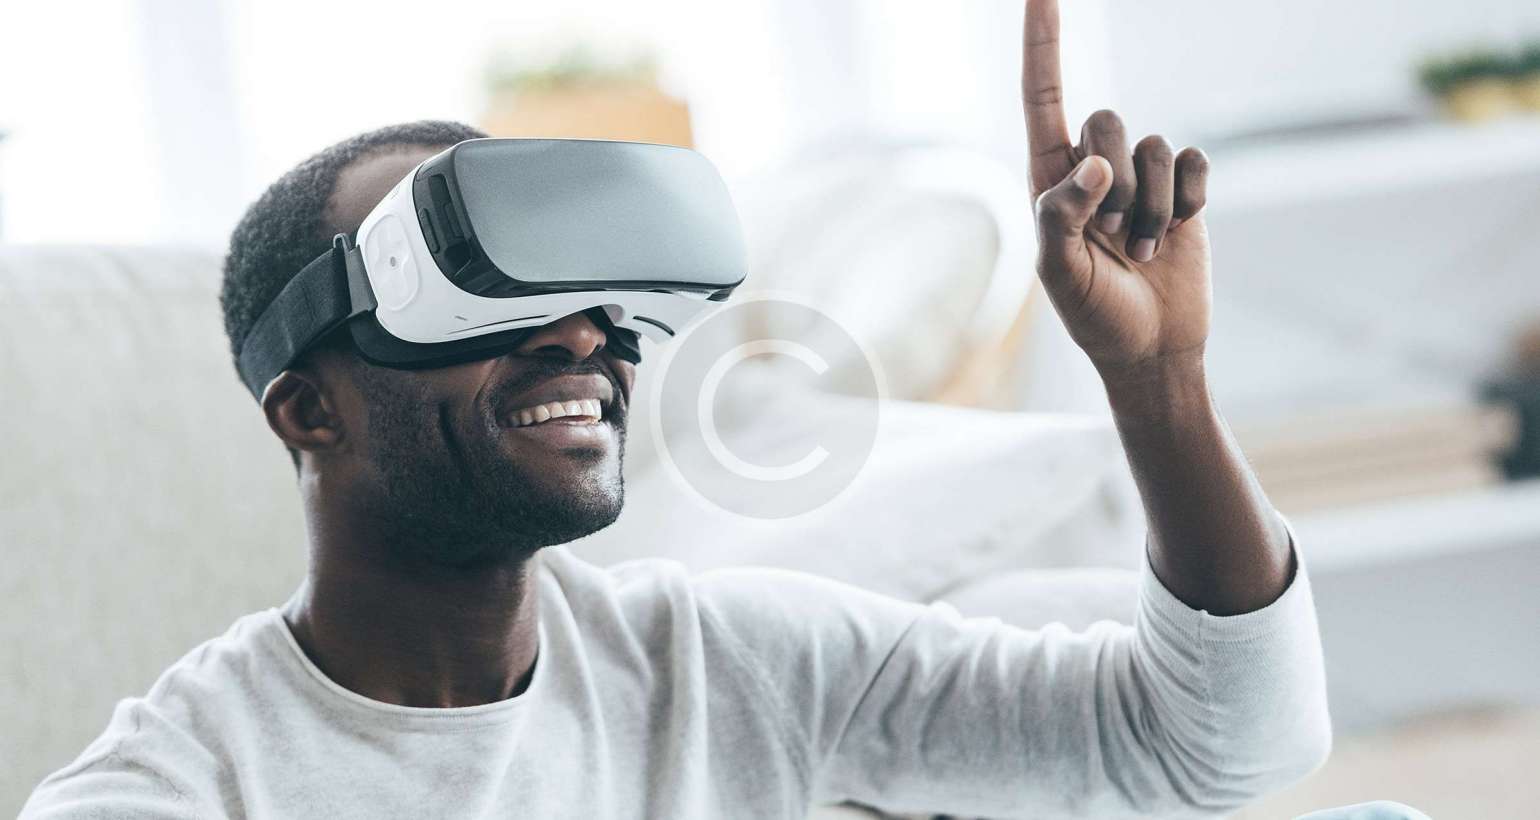 Advantages & Disadvantages of Virtual Reality